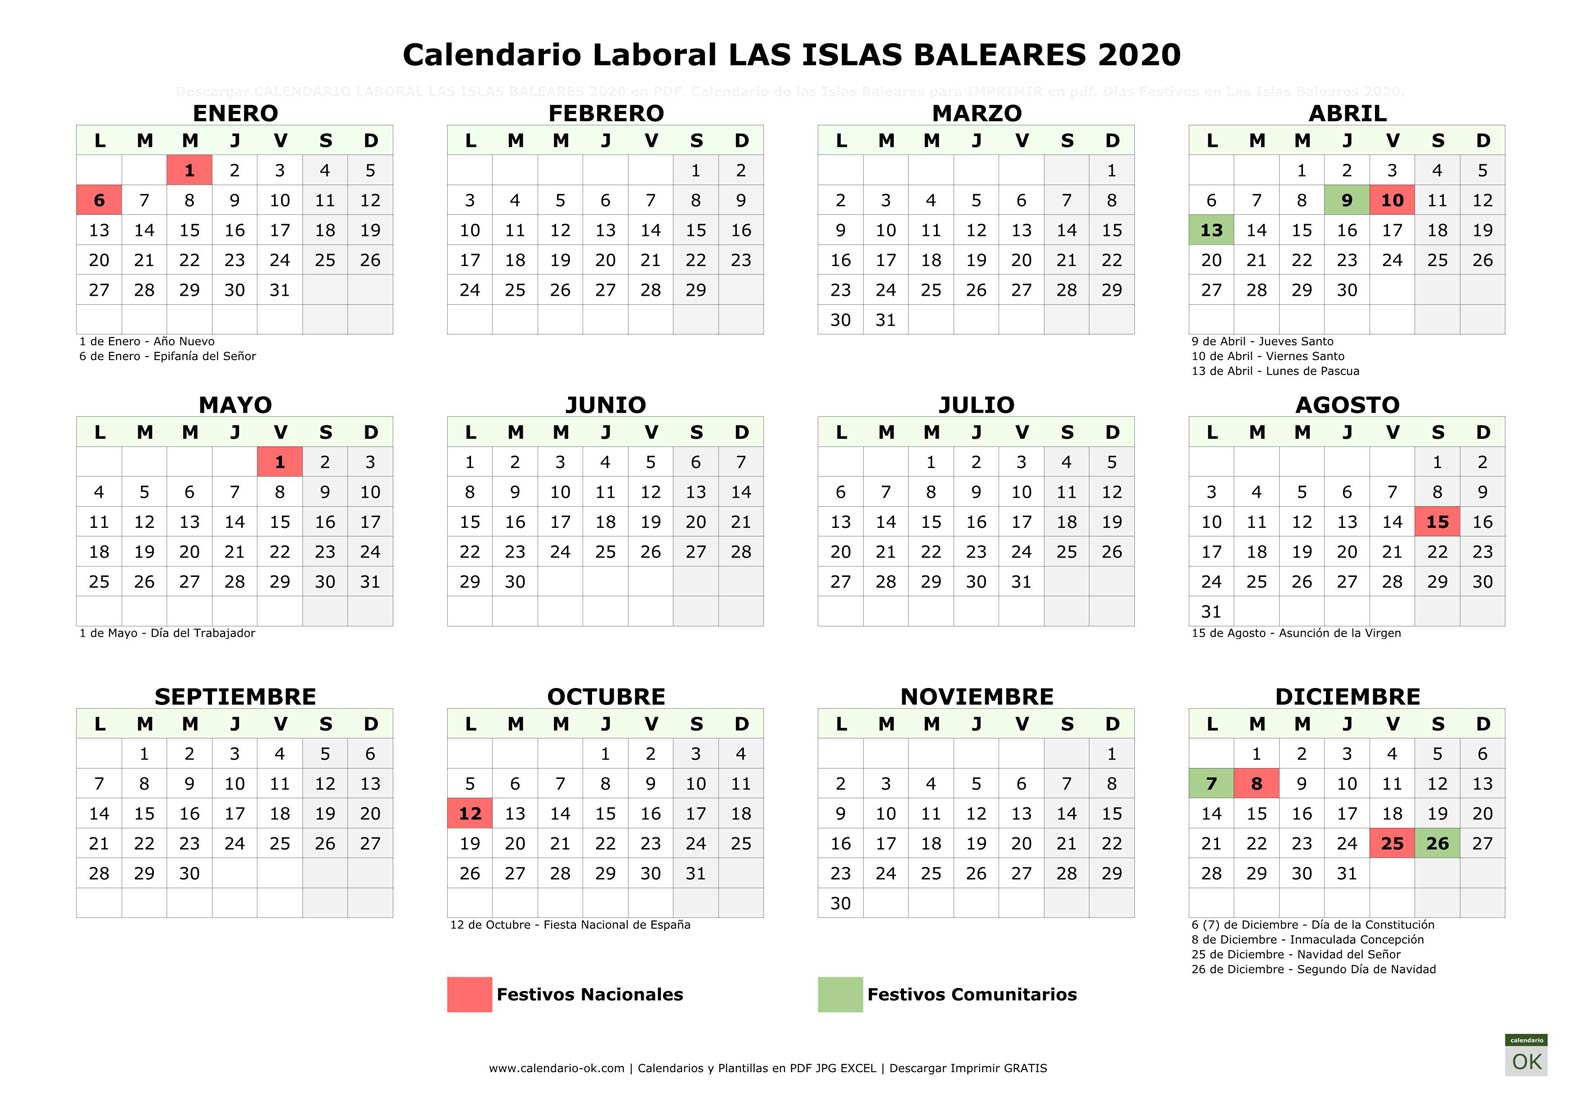 Calendario Laboral ISLAS BALEARES 2020 horizontal